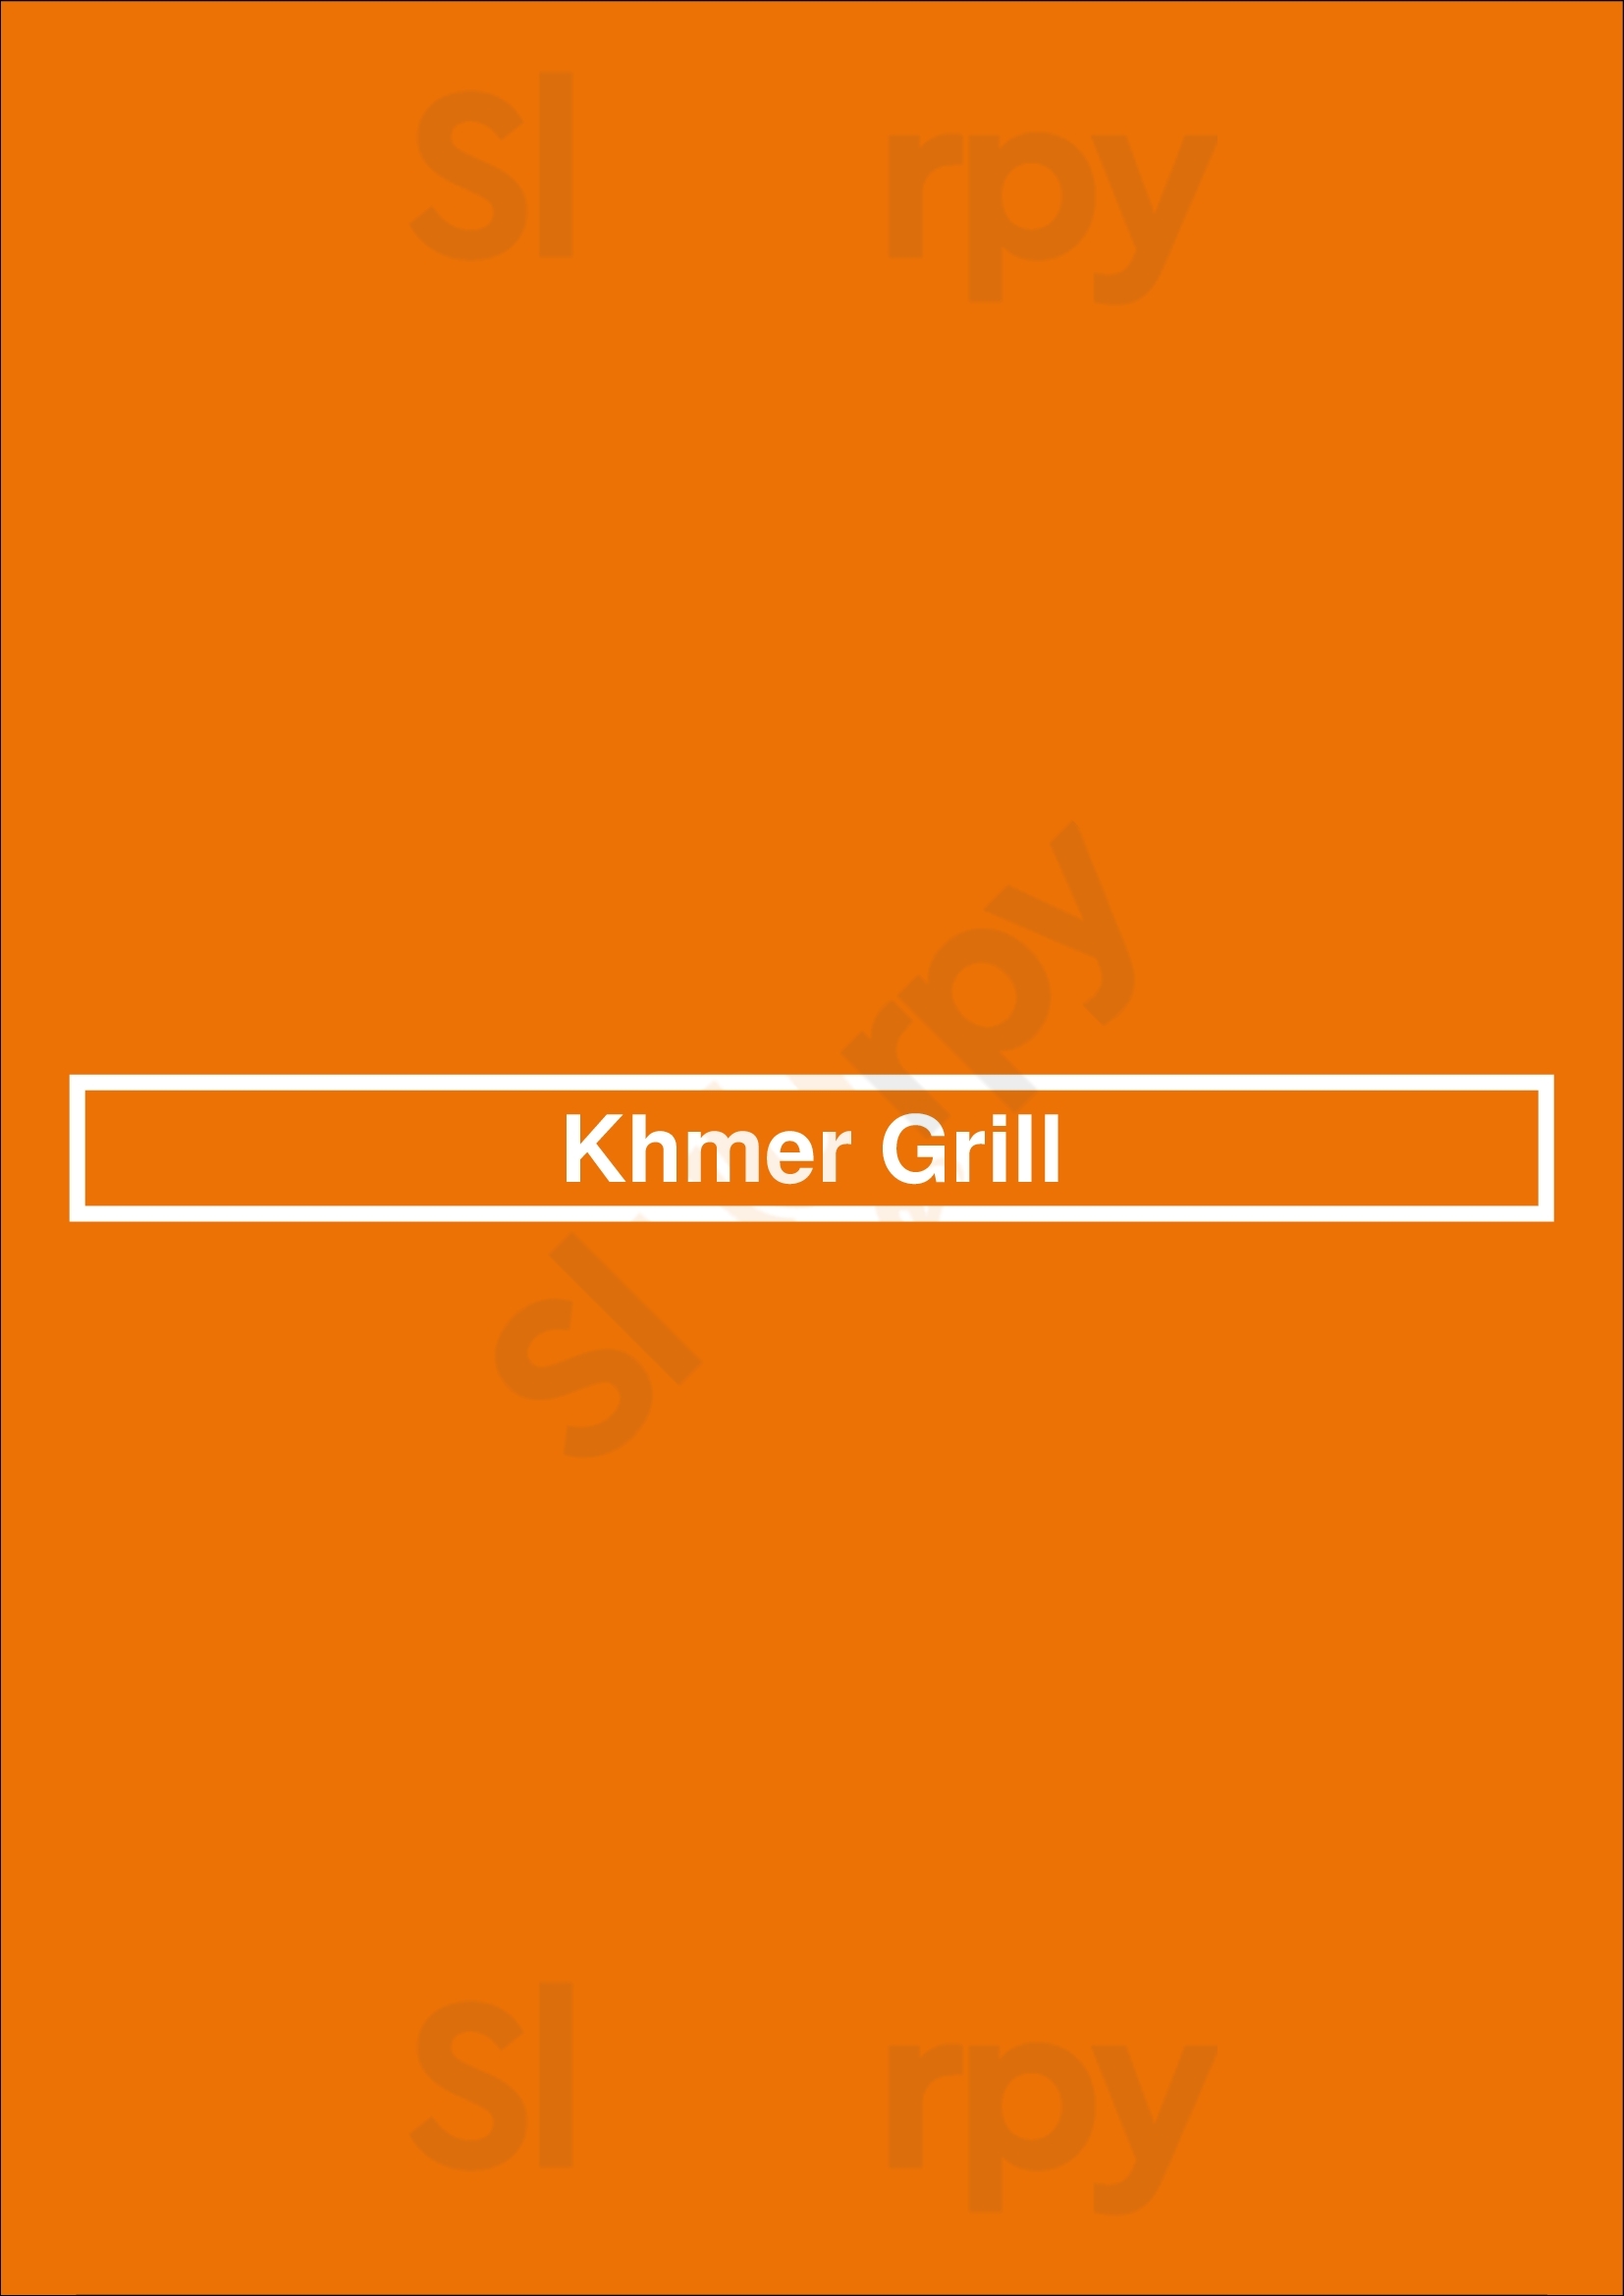 Khmer Grill Philadelphia Menu - 1